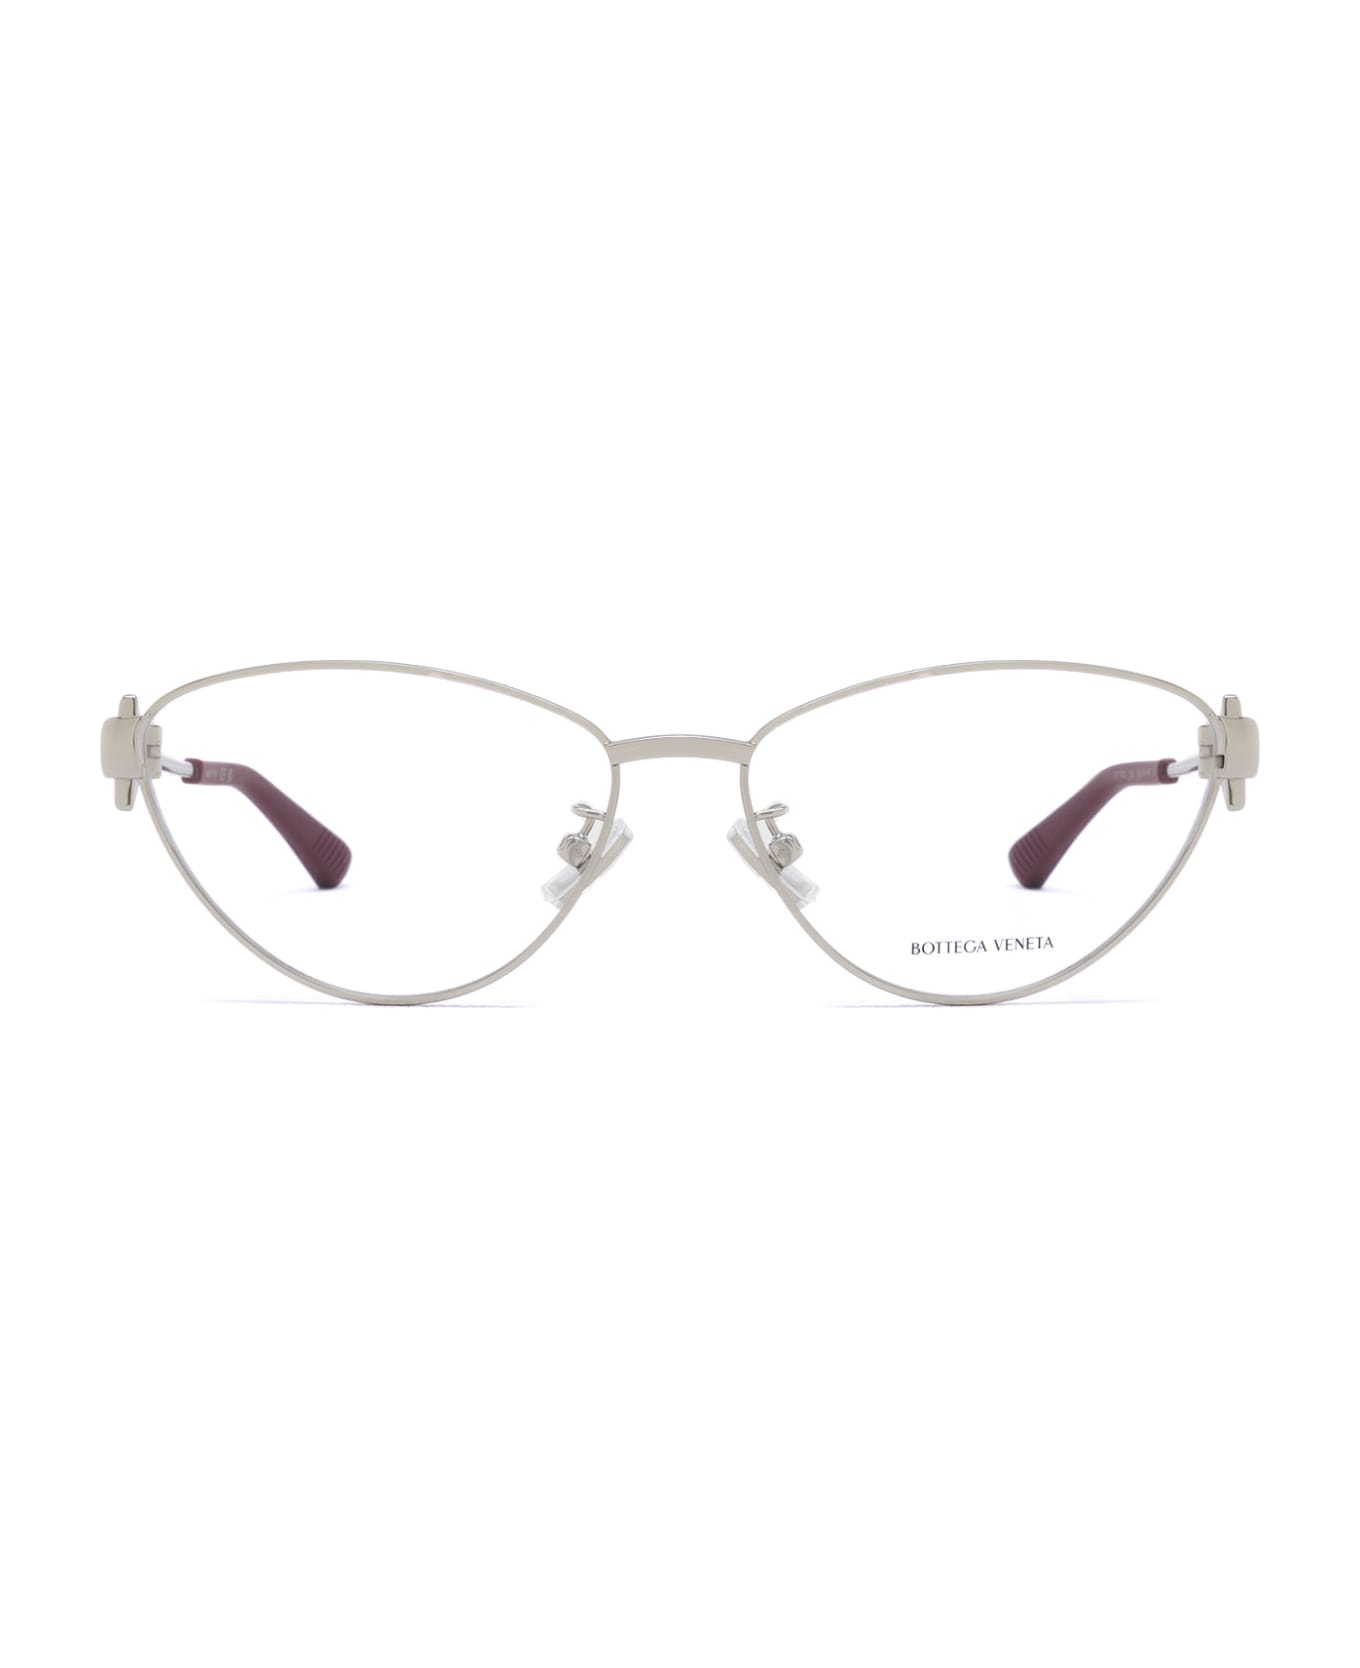 Bottega Veneta Eyewear Bv1188o Silver Glasses - Silver